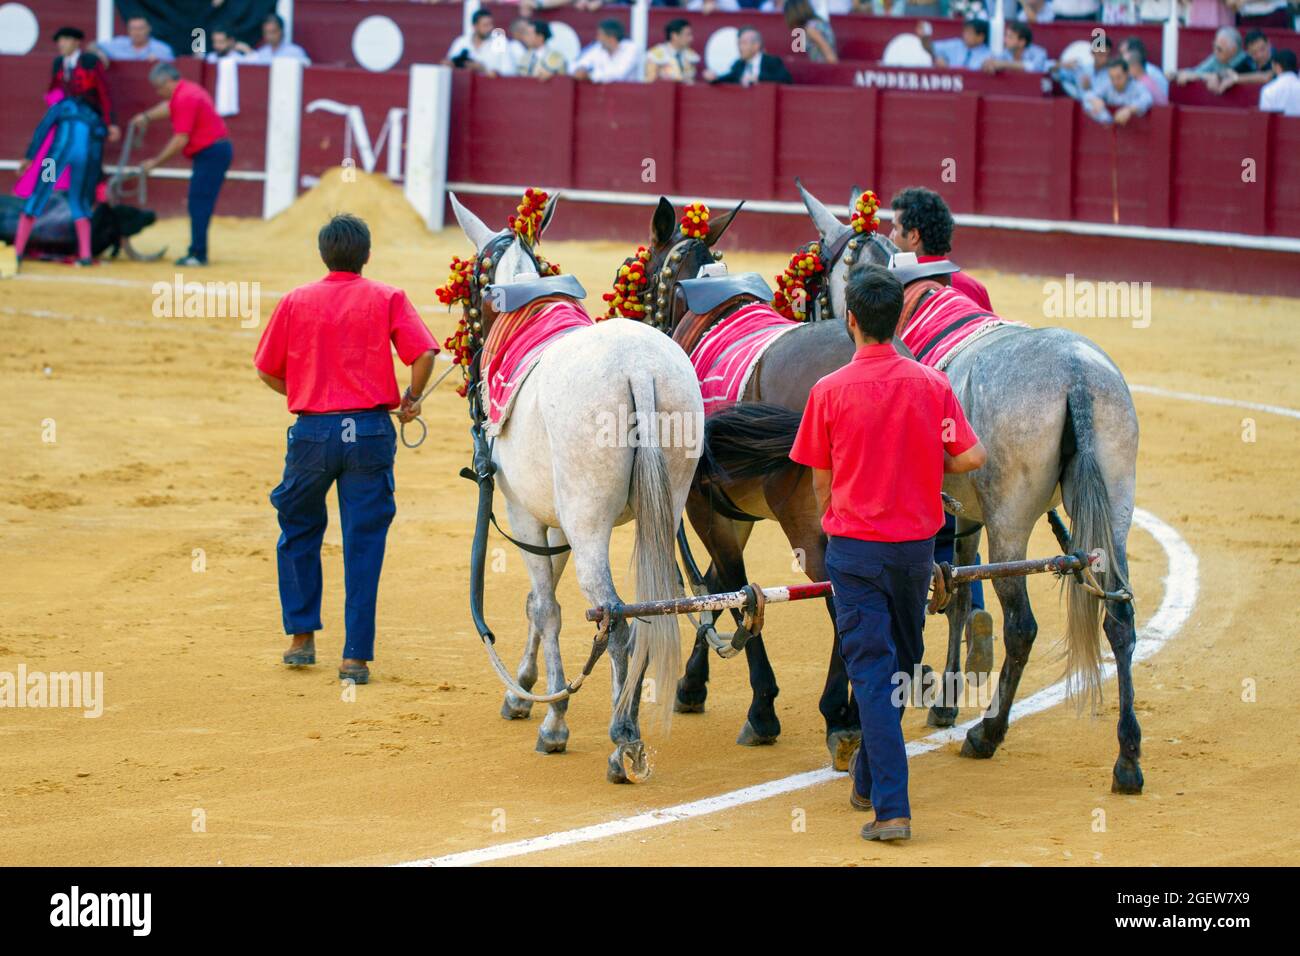 Stierkampf in Malaga Spanien Stockfoto